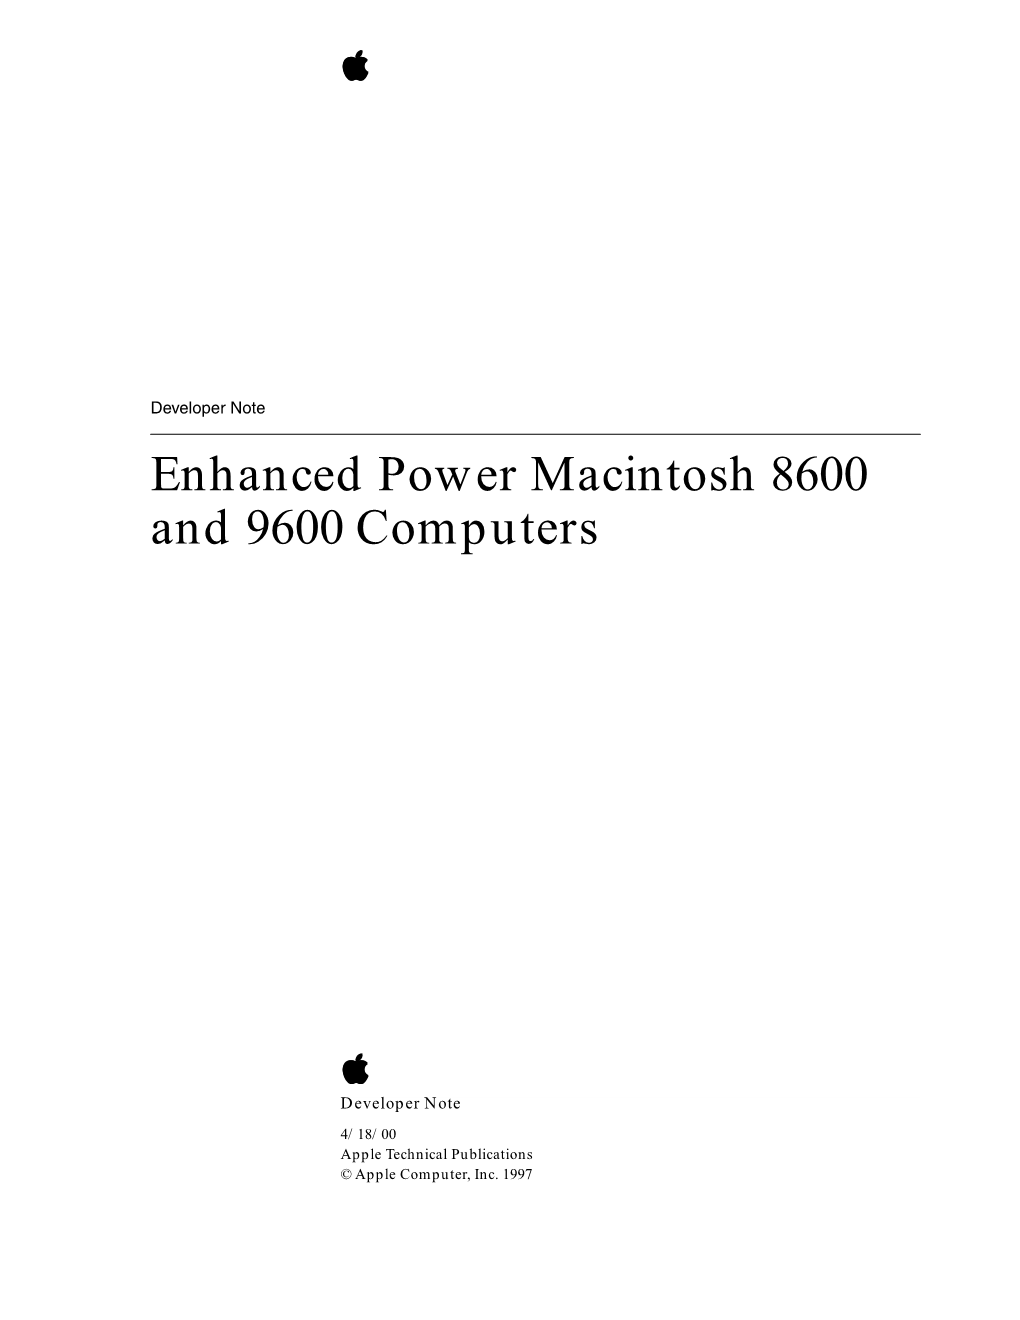 Enhanced Power Macintosh 8600 and 9600 Computers